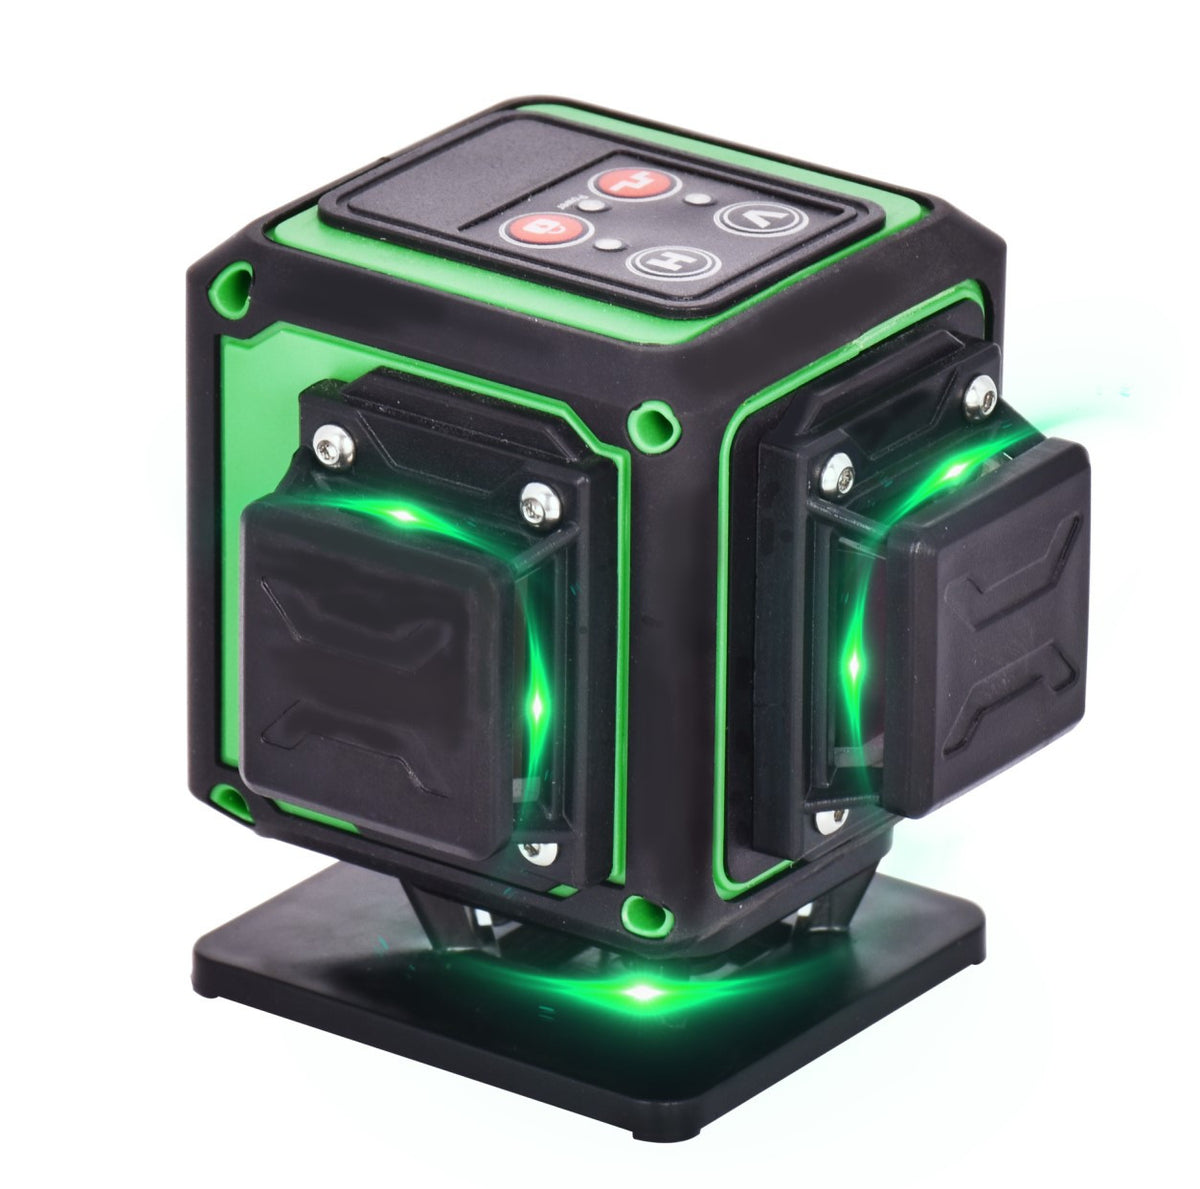 Nivela Laser Verde 3D - 360°, cu autonivelare - Beiter BAJ-3DG